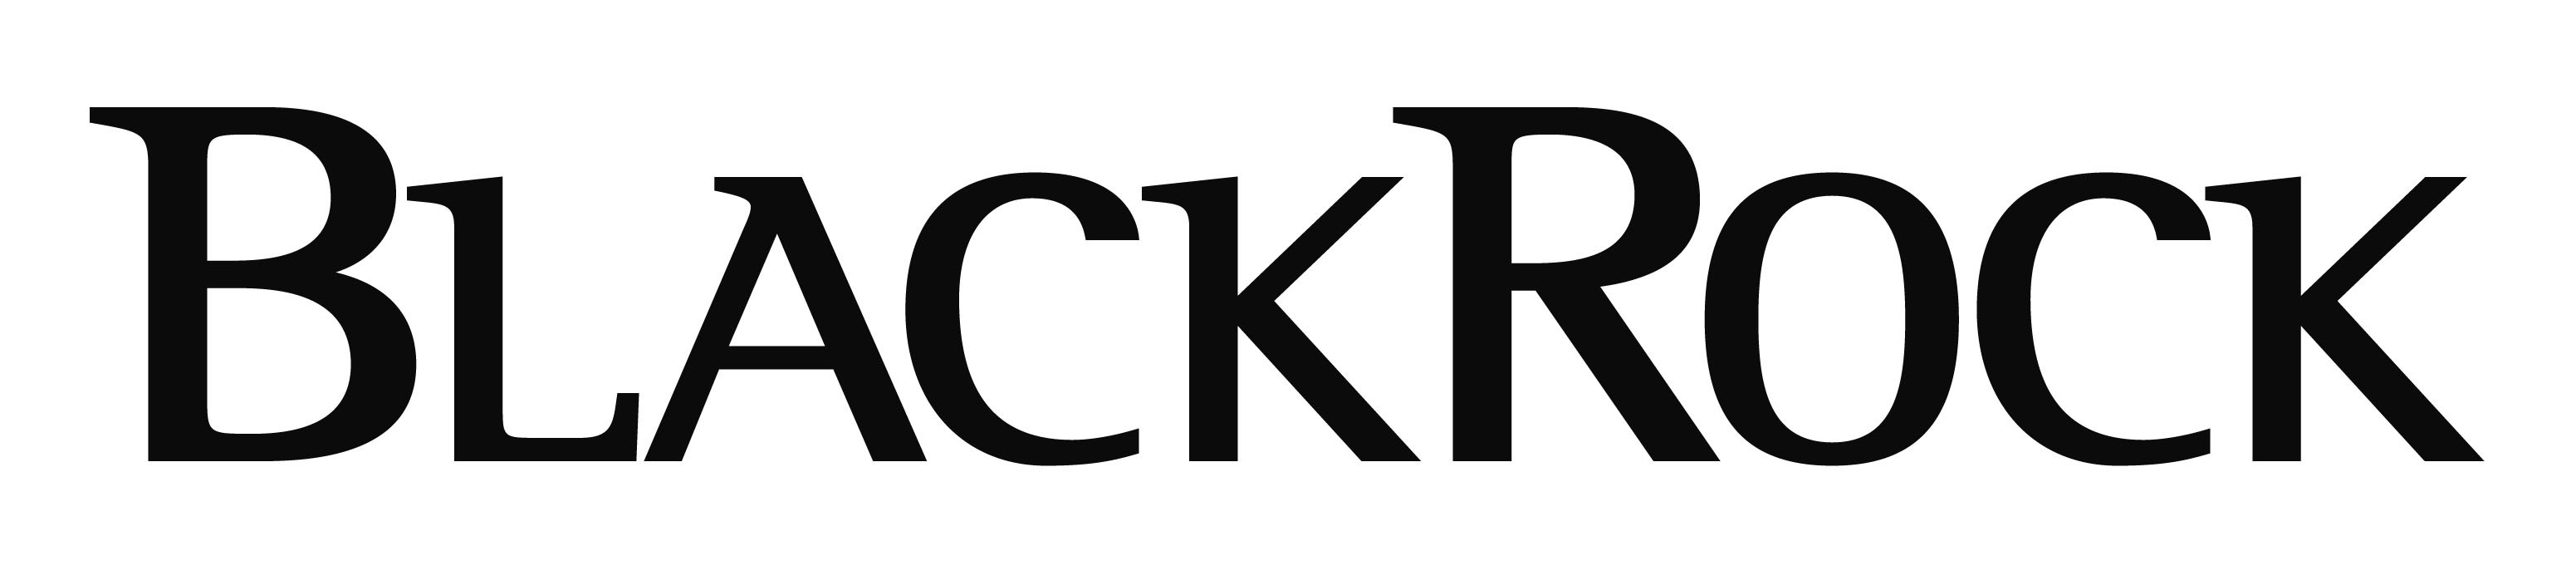 Blackrock Frontiers Investment Trust Plc